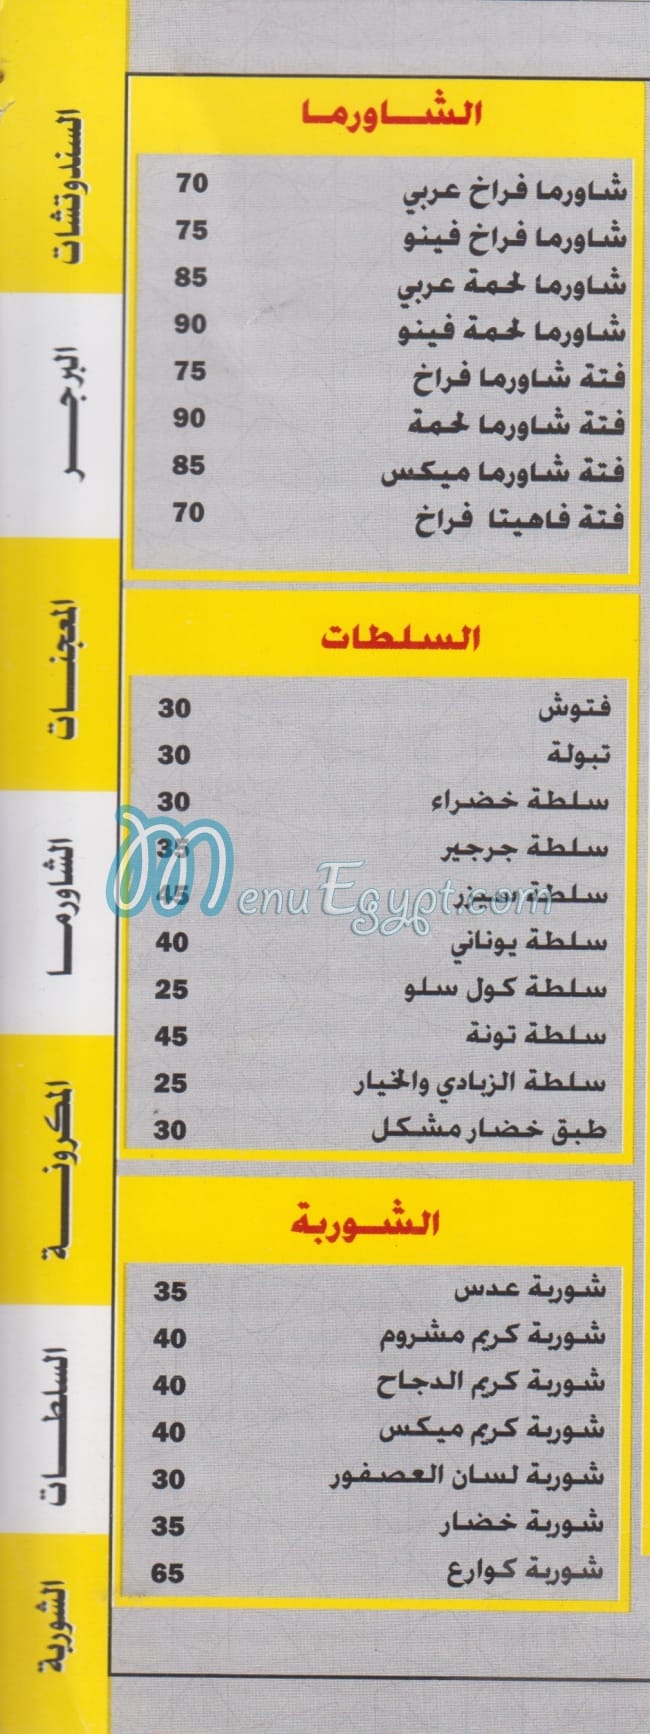 Share3 Demsheq menu Egypt 1